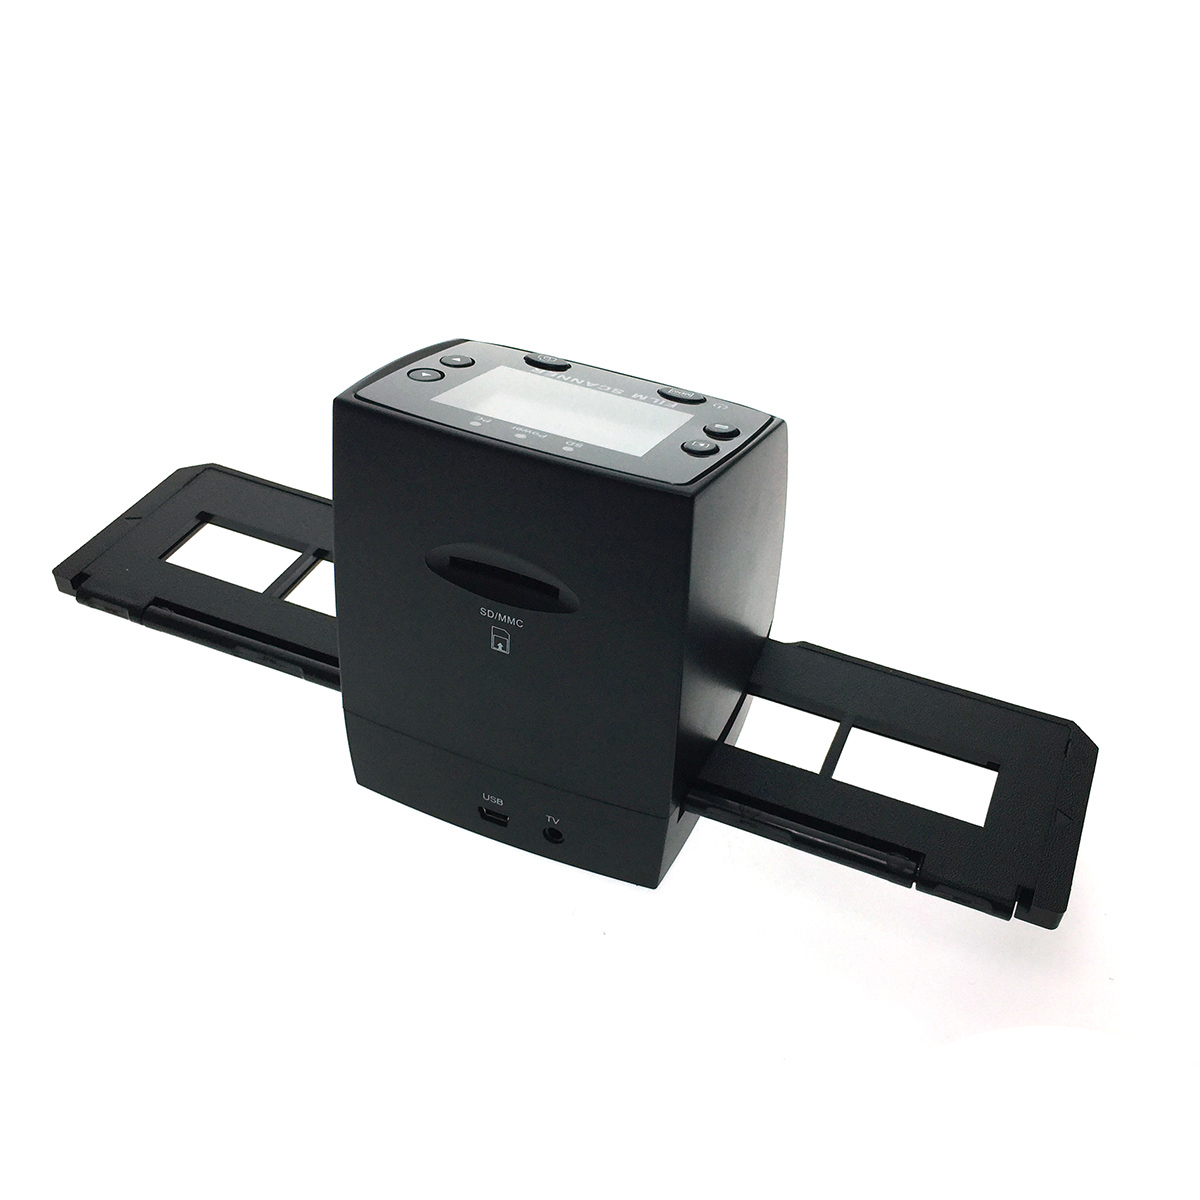 Mdfc 1400. Espada Filmscanner ec717. Сканер Espada Filmscanner ec718 черный. Сканер Espada QPIX MDFC-1400. Espada Filmscanner ec717 купить.